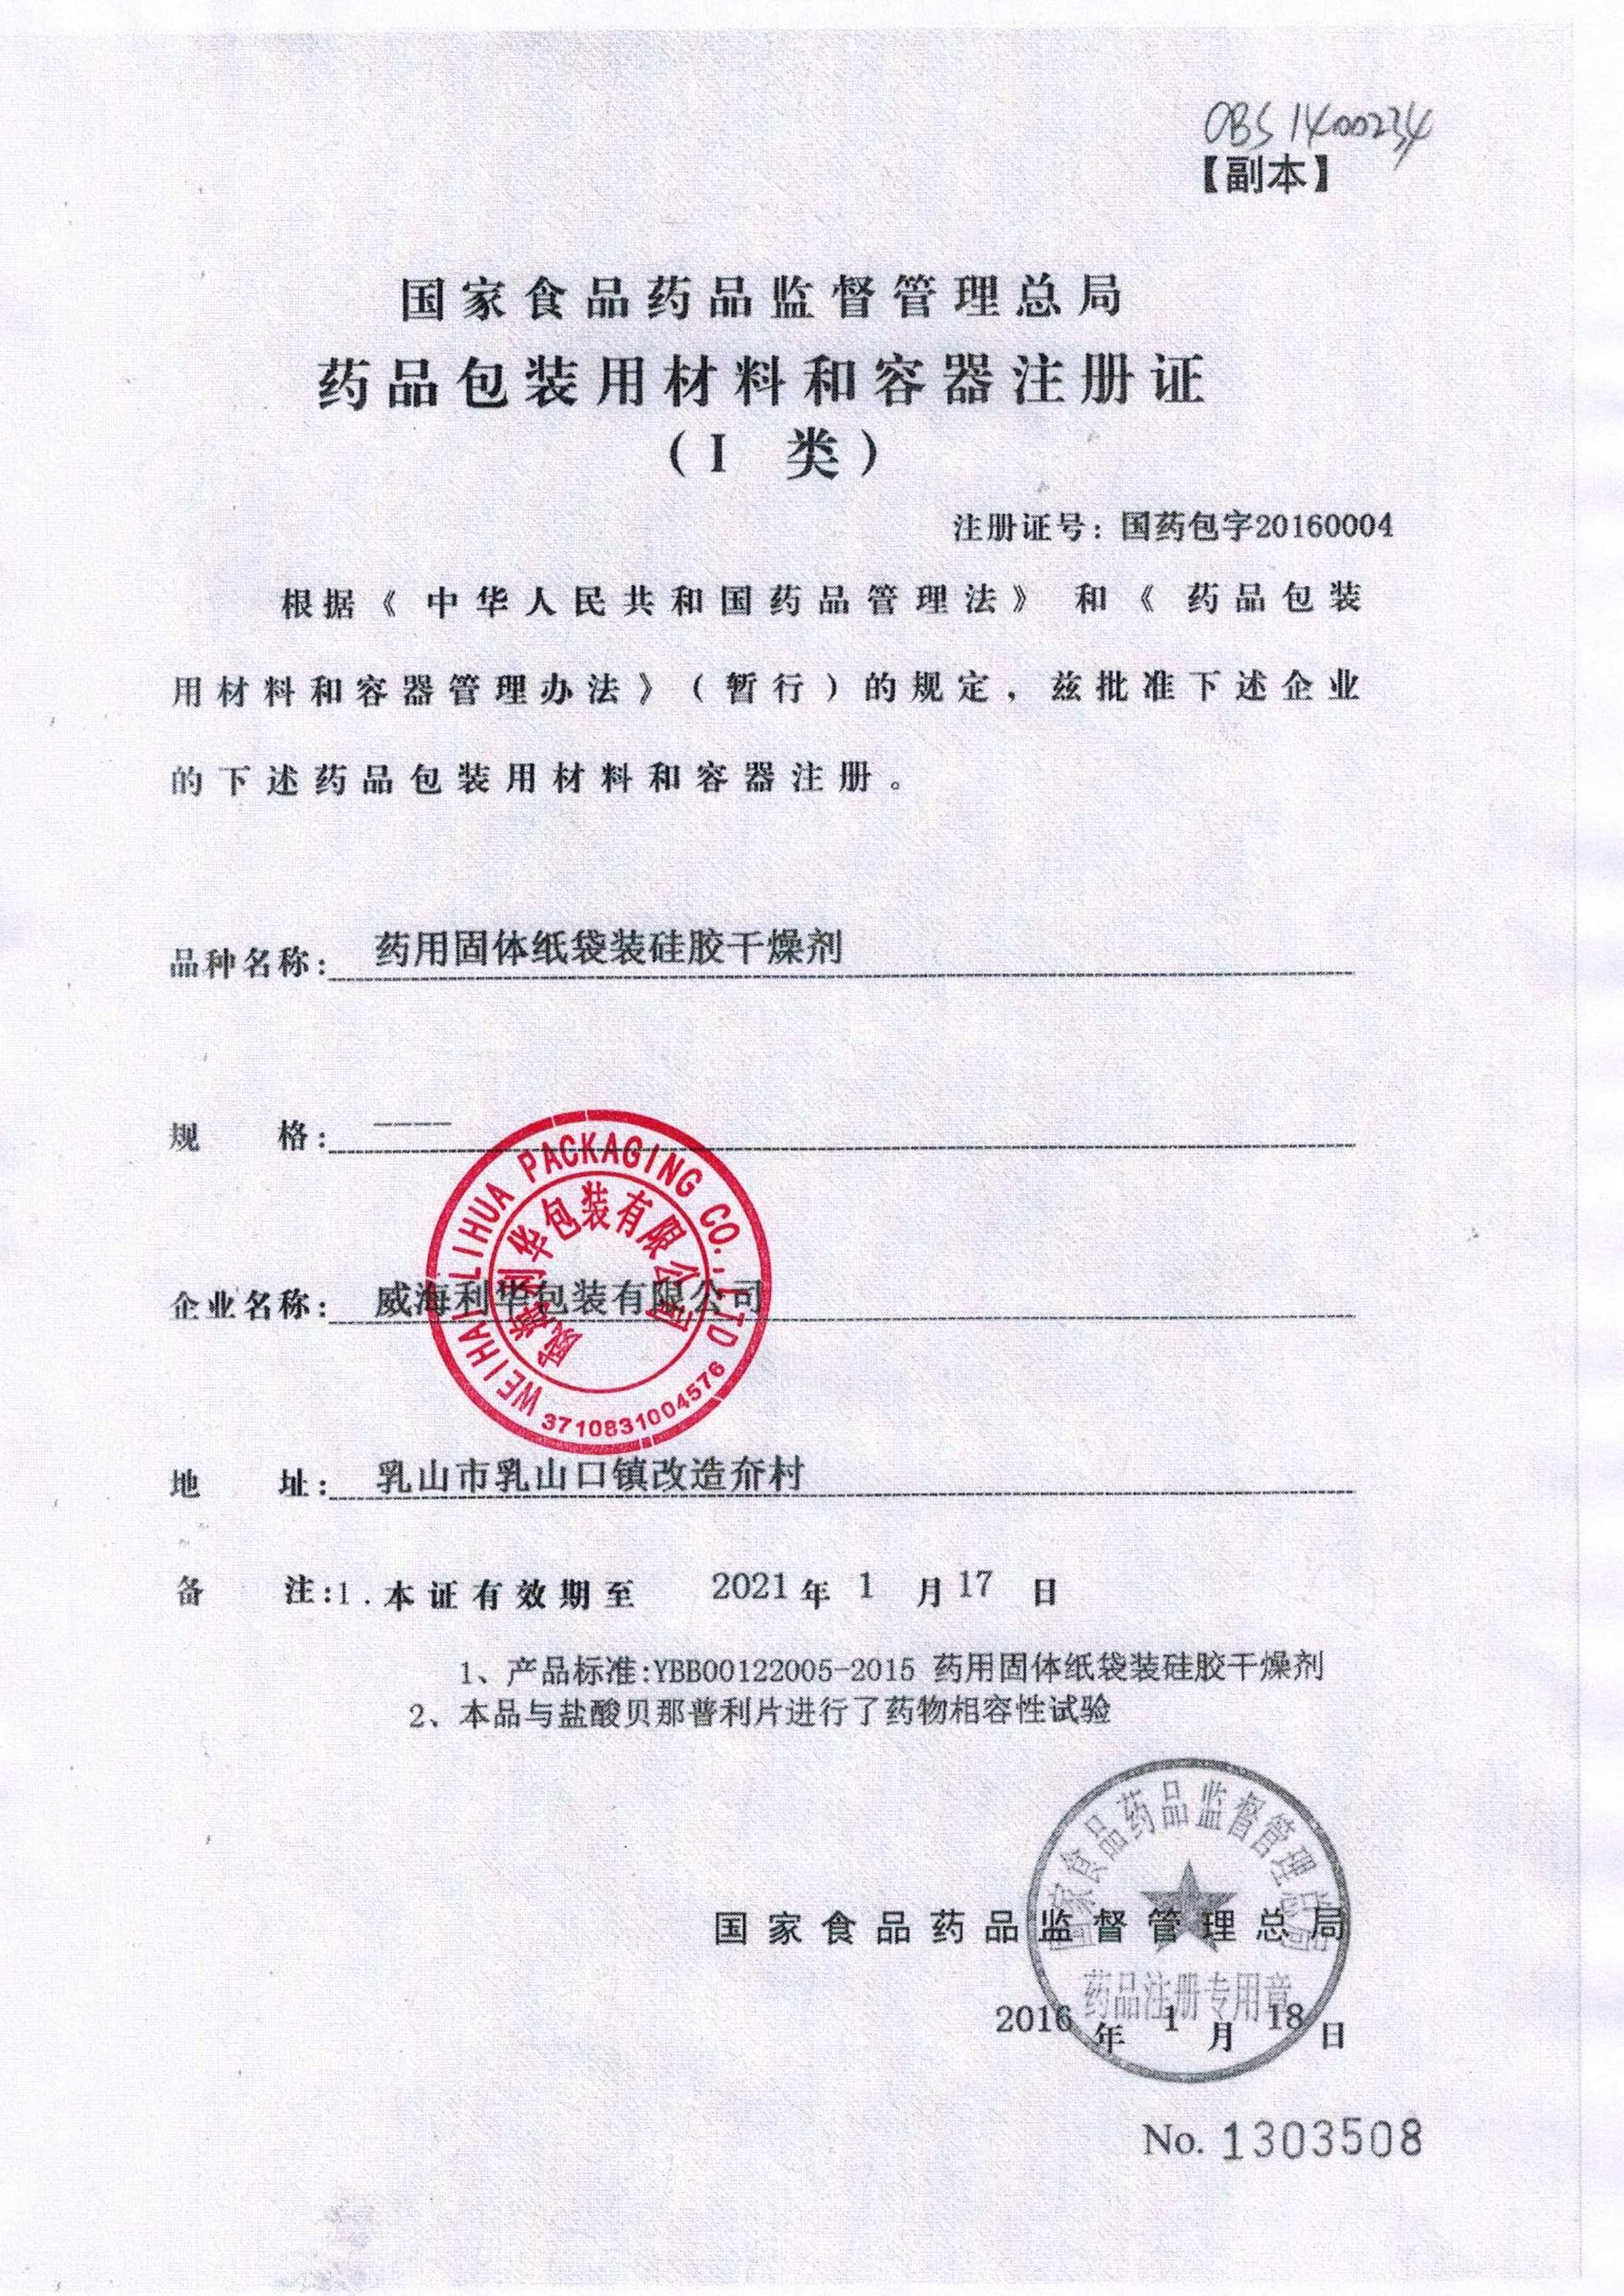 Packing material certificate